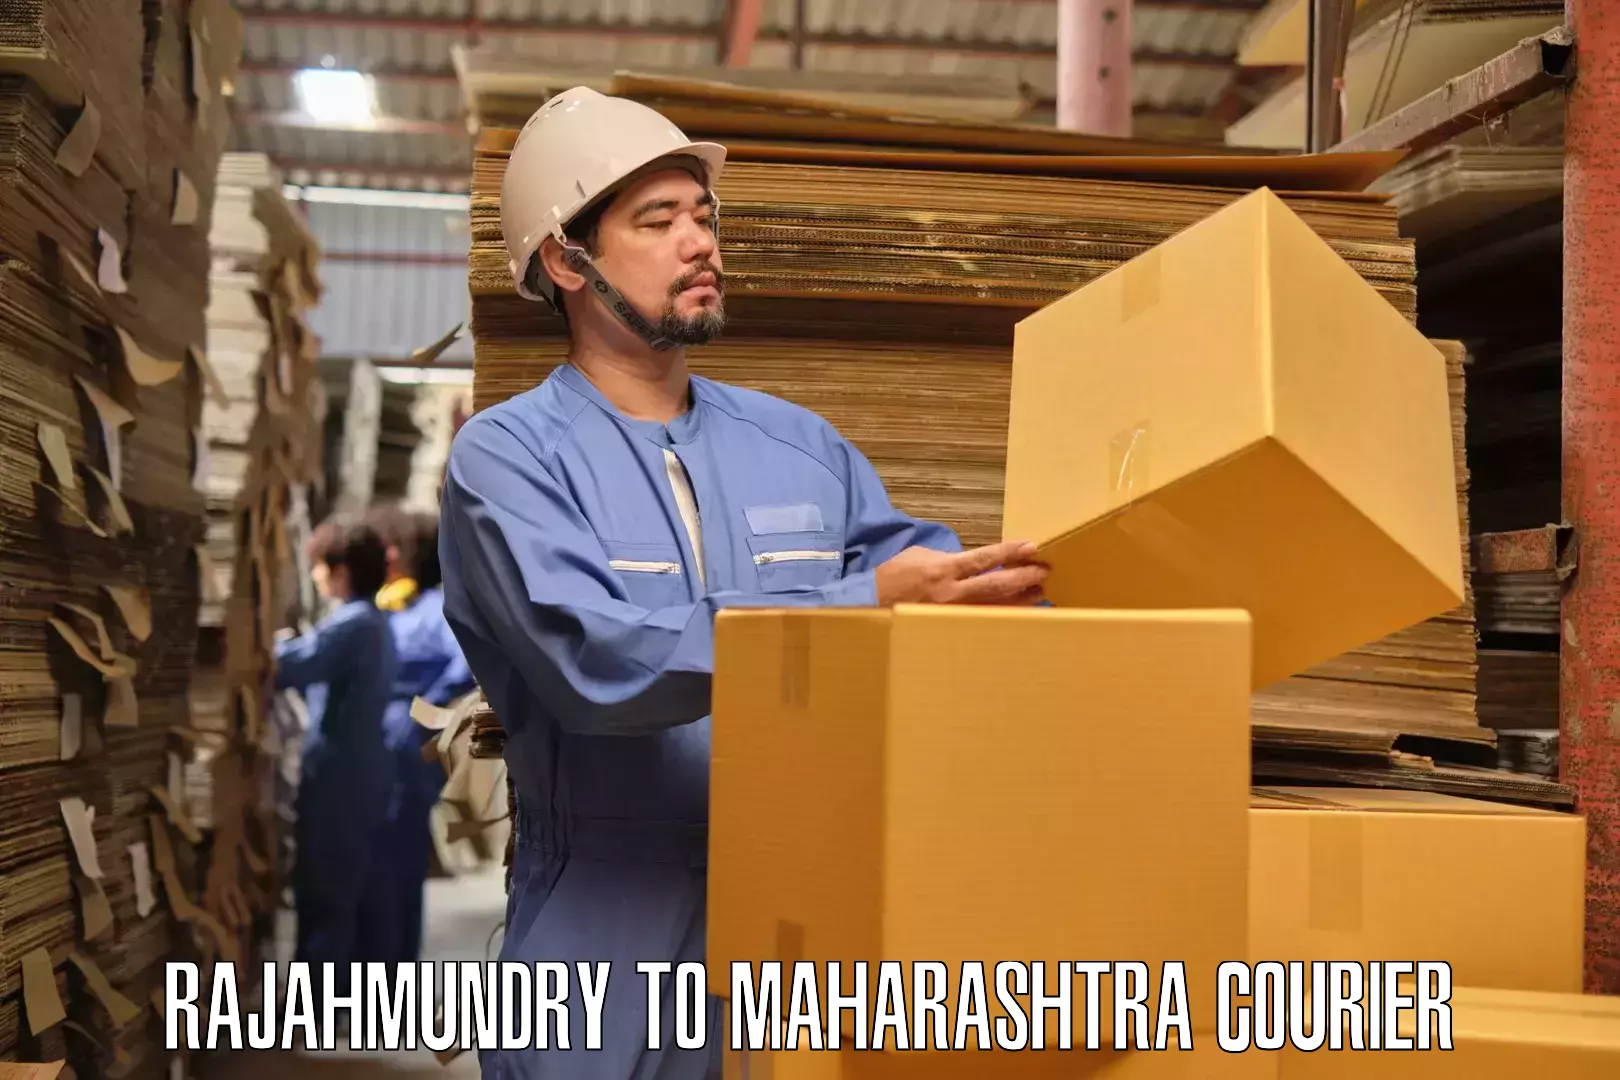 Professional moving company Rajahmundry to Dharmabad